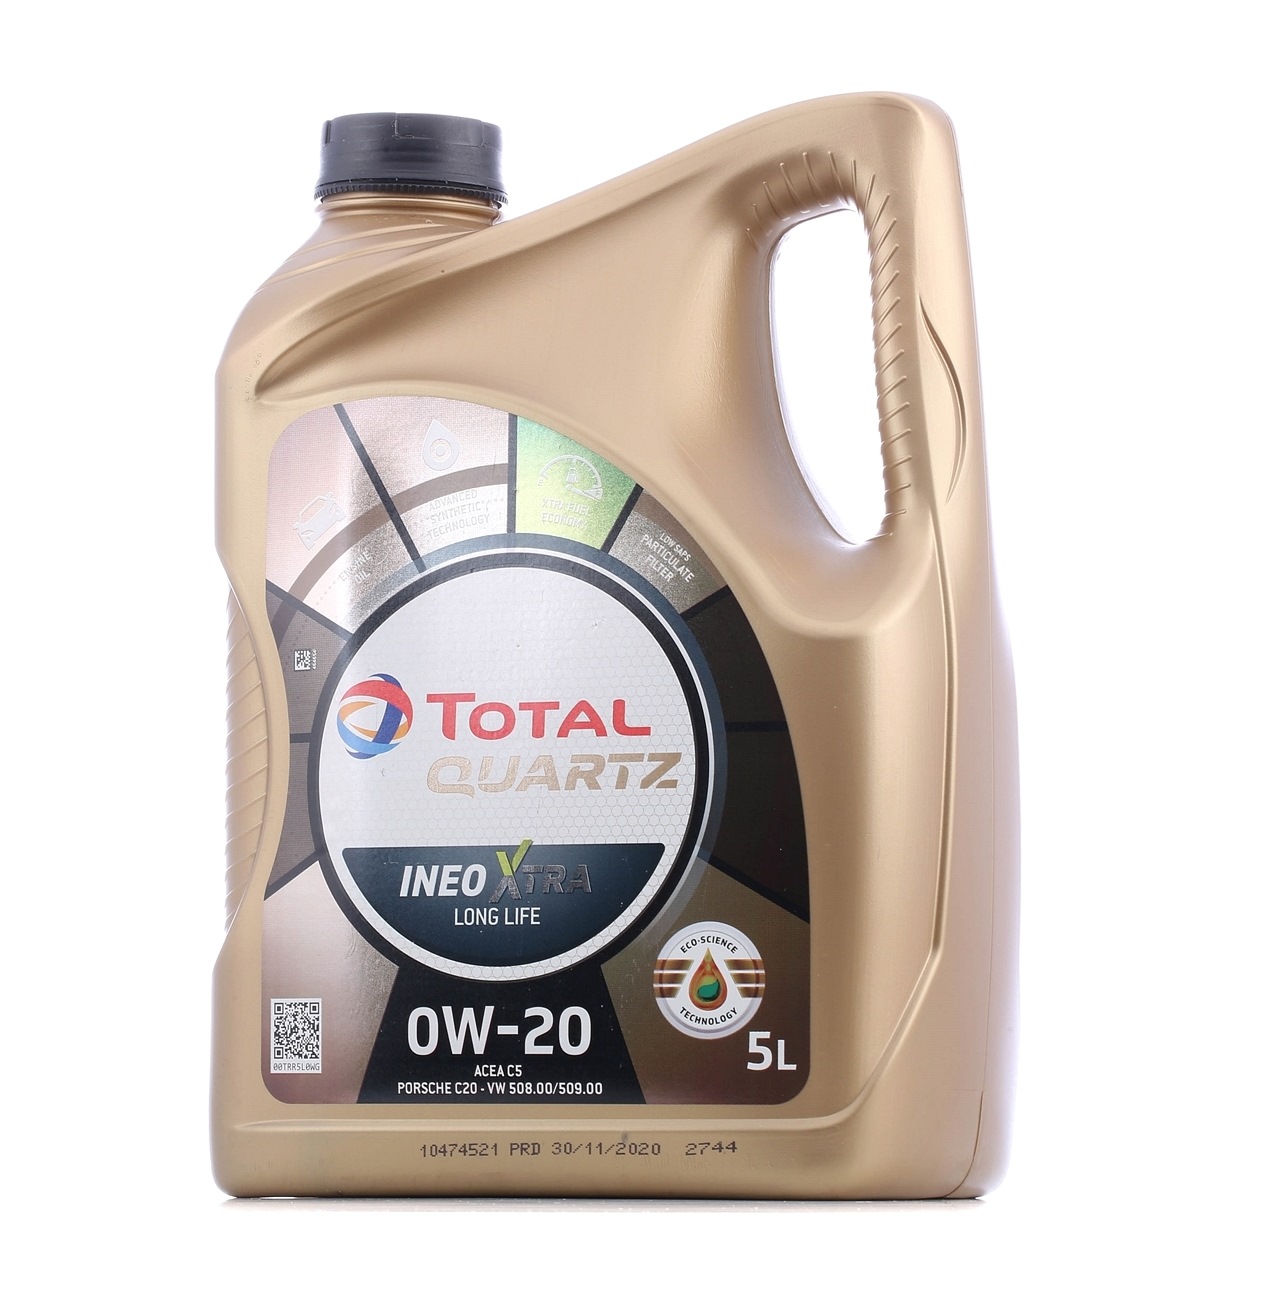 Buy Auto oil TOTAL diesel 3210205 Quartz, Ineo Xtra Long Life 0W-20, 5l